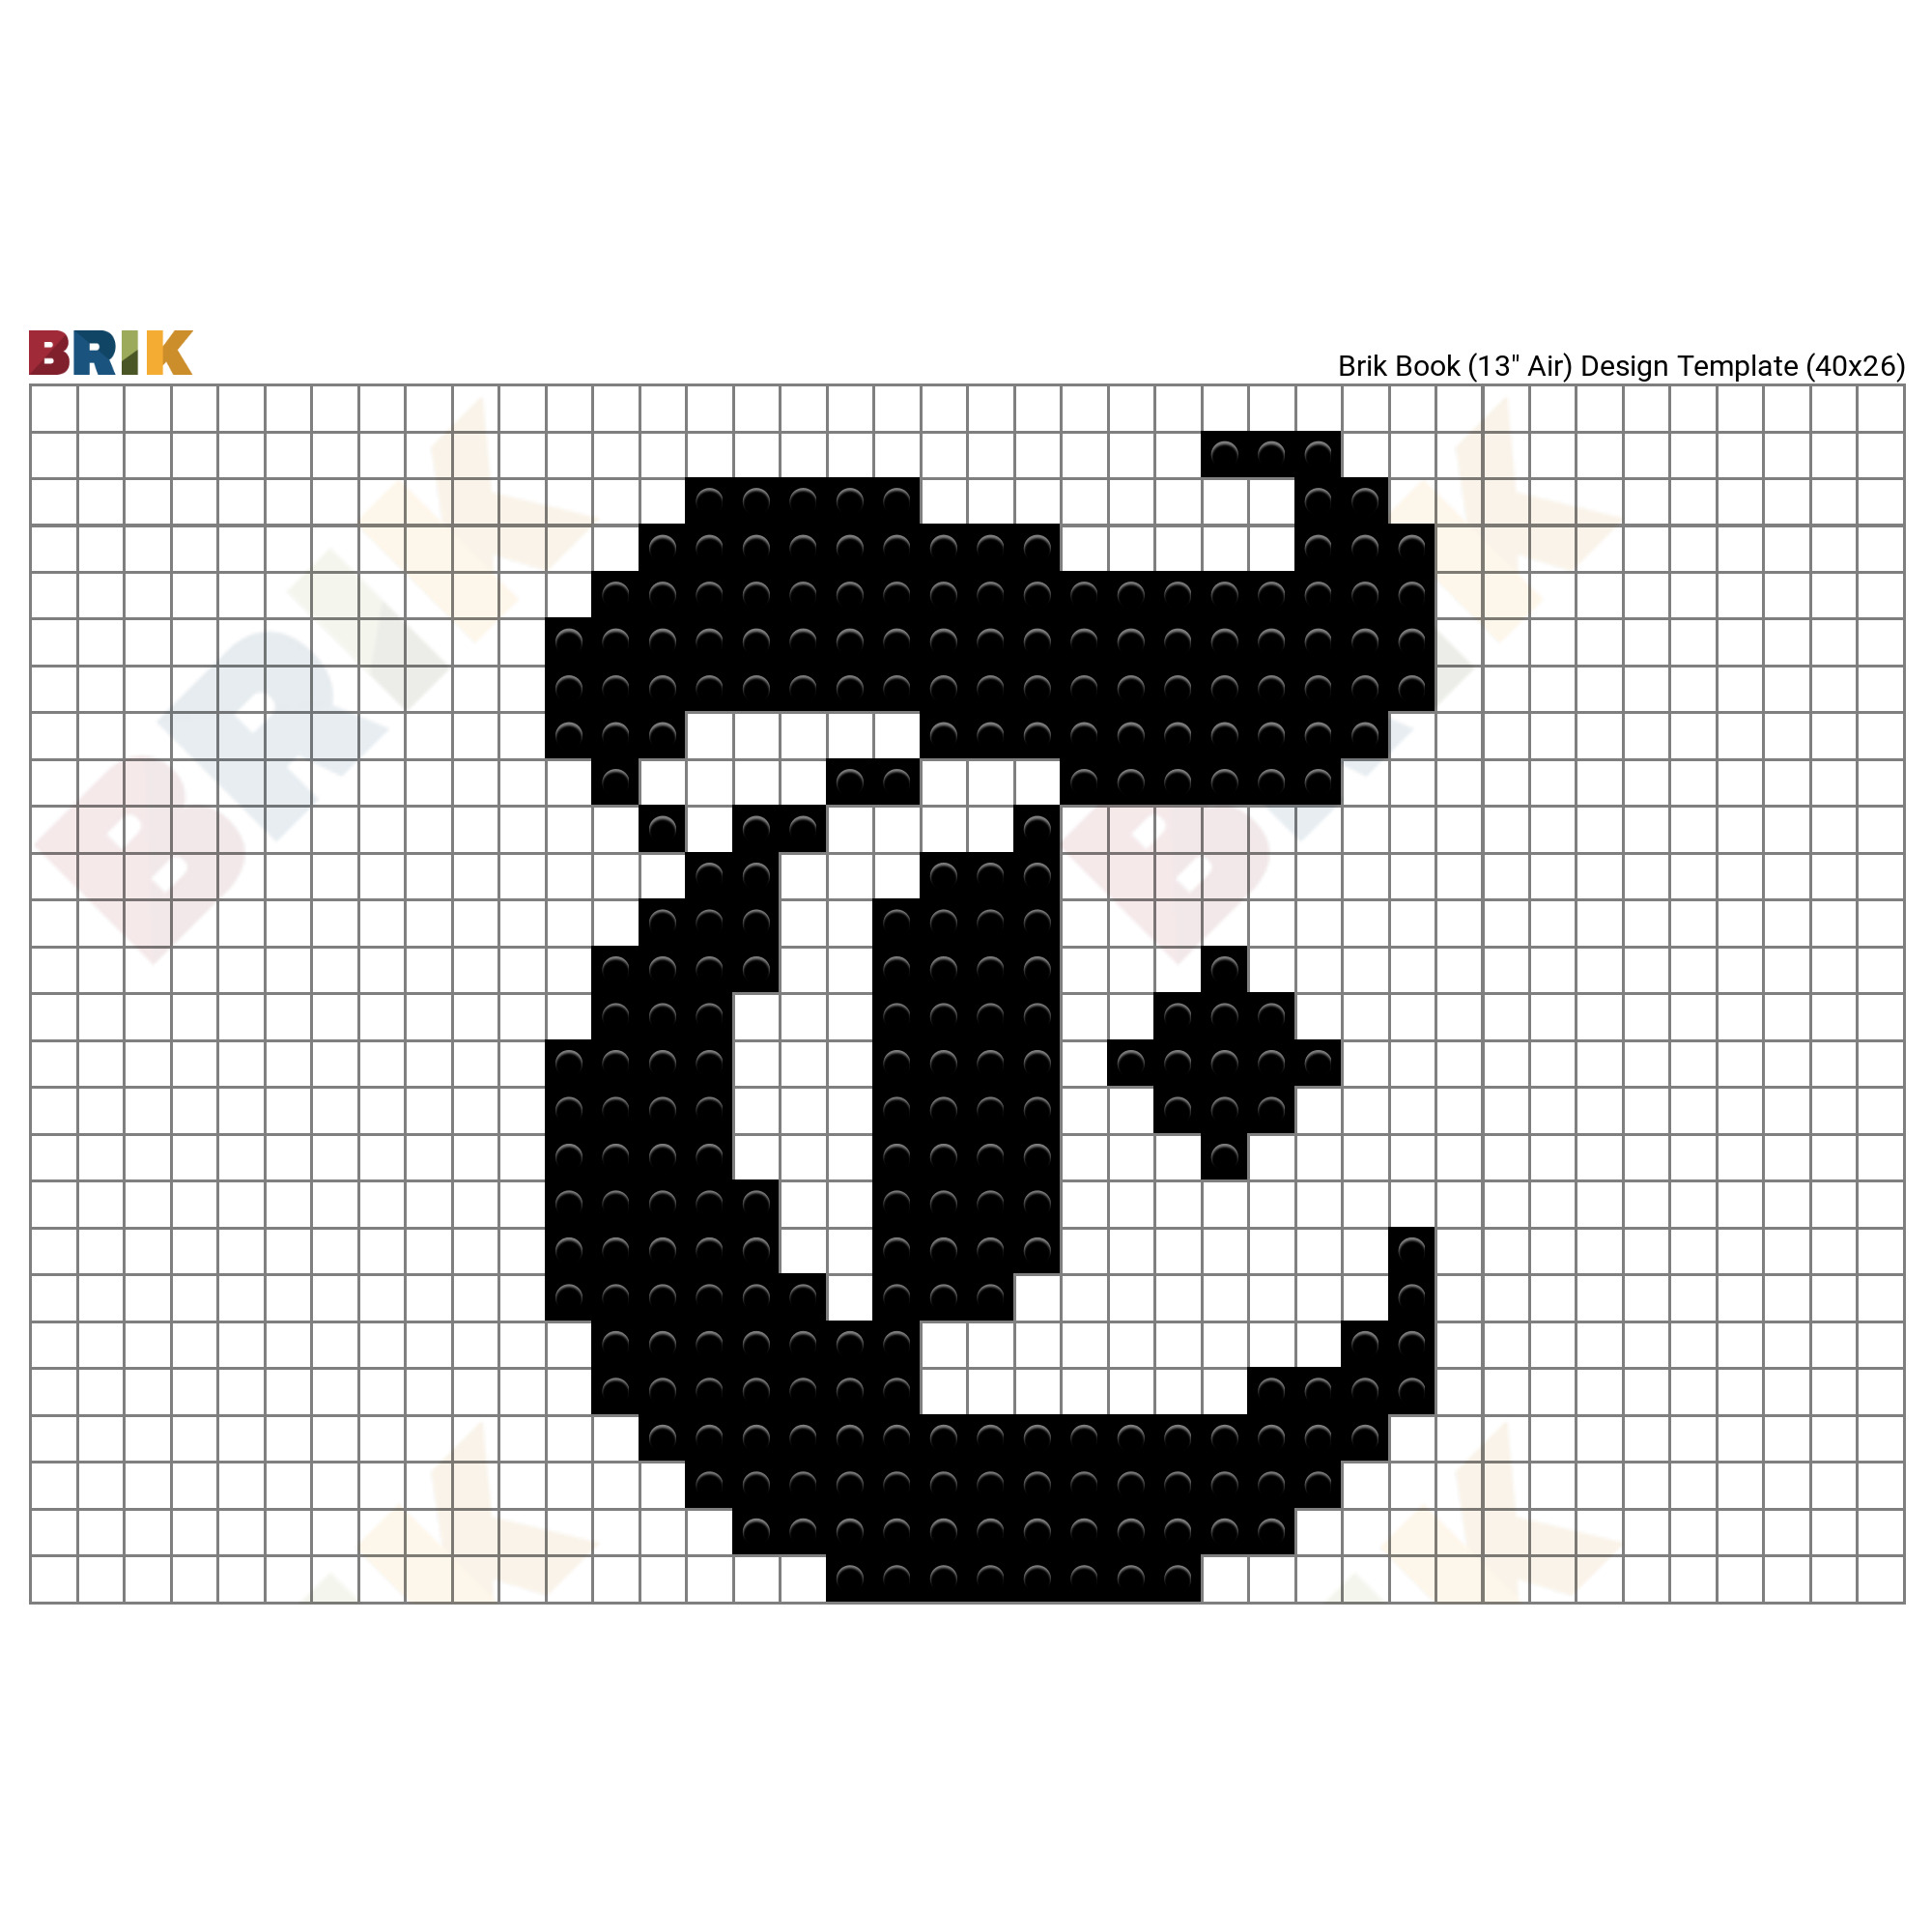 Pixilart - Twice logo by Pixels-4-U